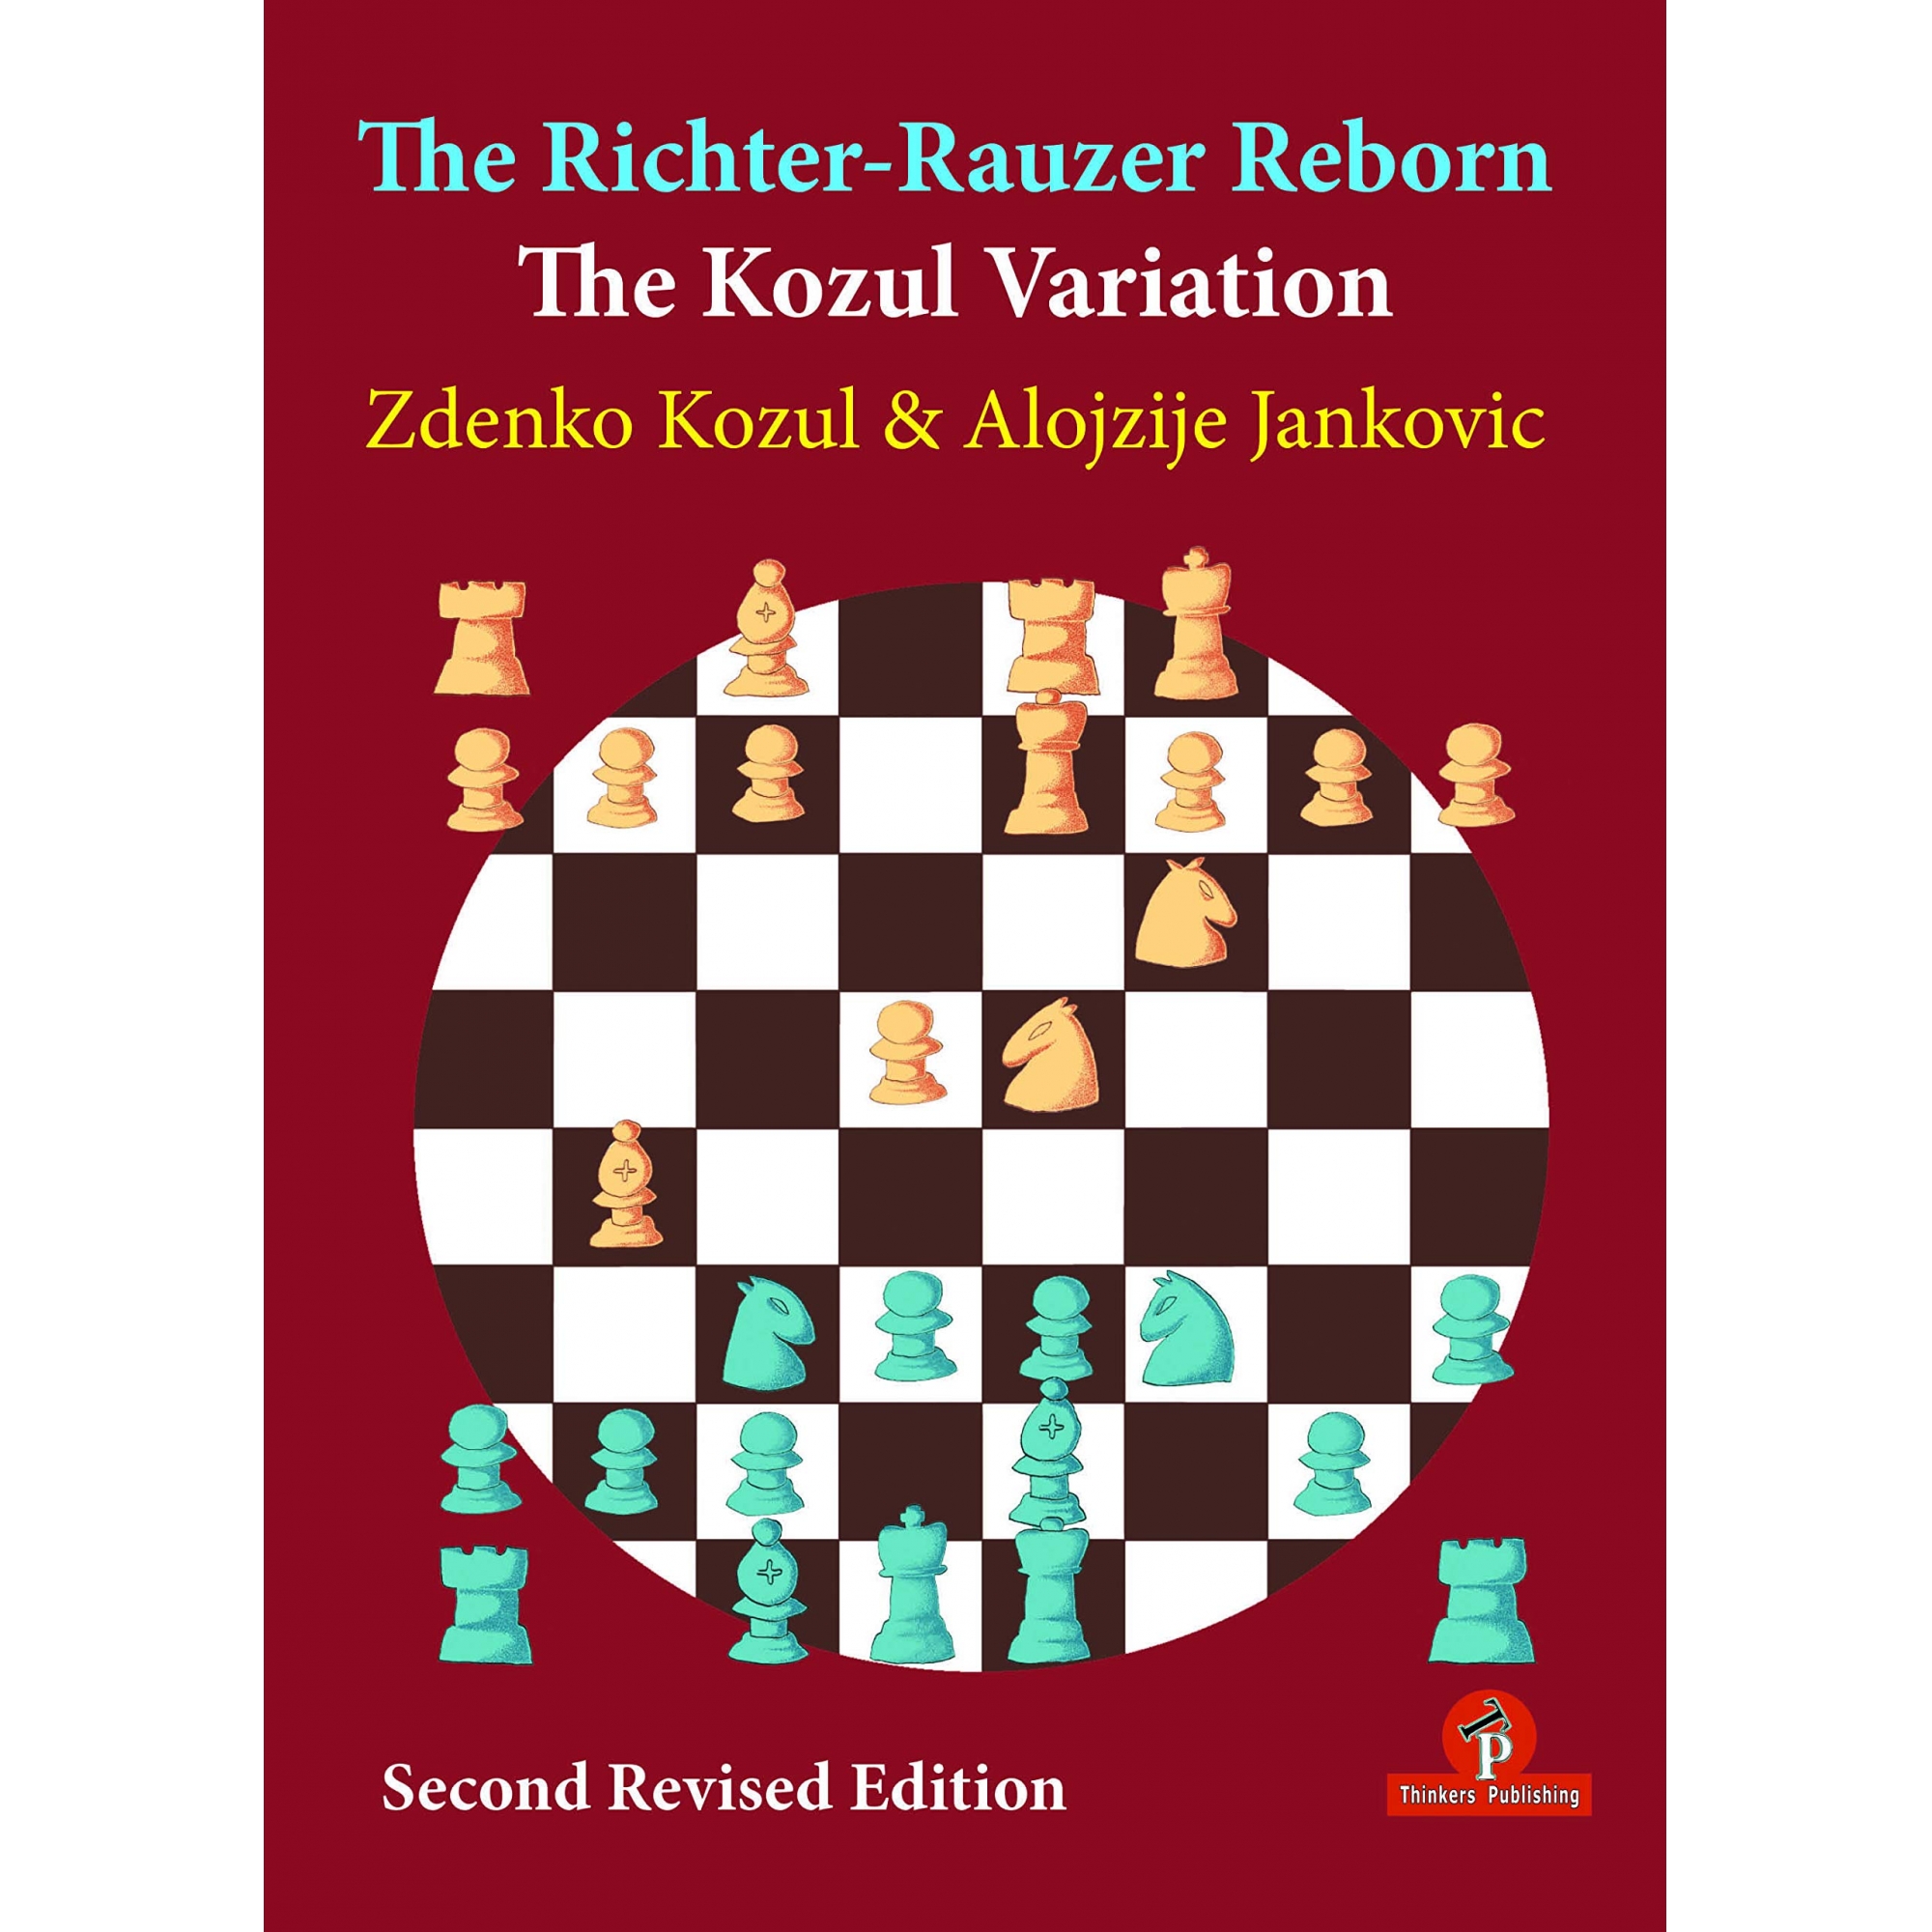 The Richter-Rauzer Reborn: The Kozul Variation